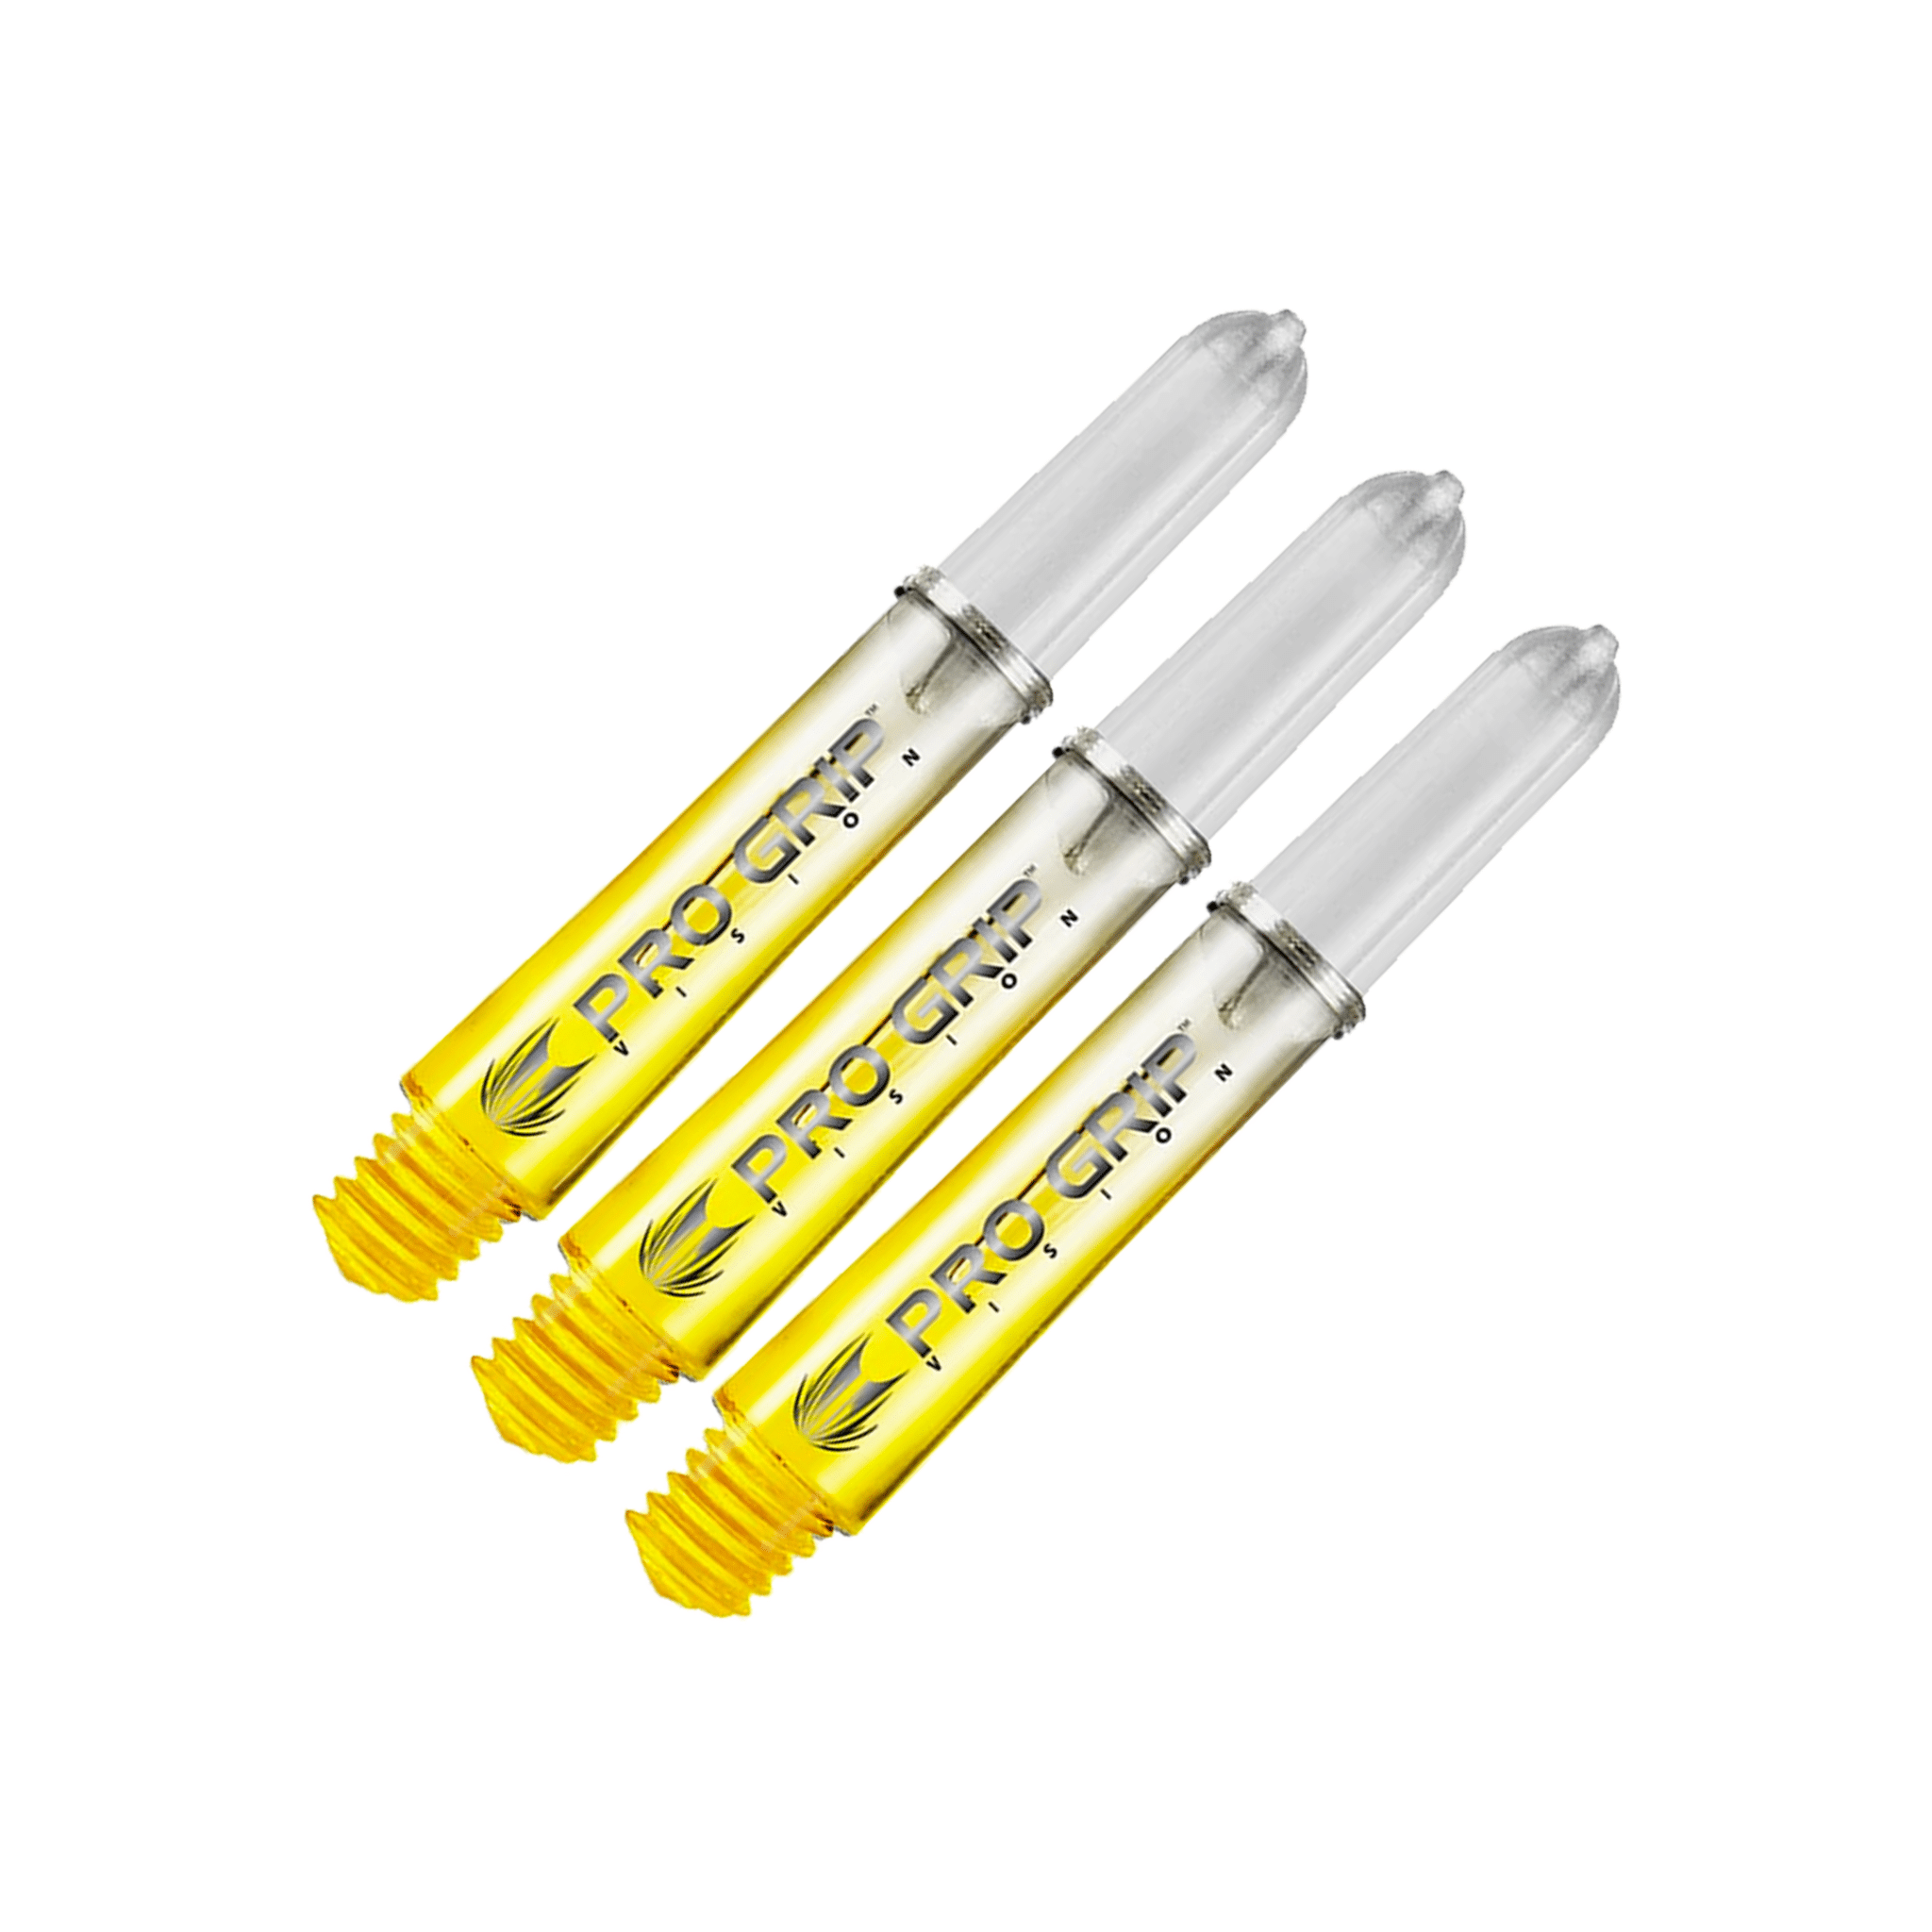 Target Pro Vision Short (34mm) Polycarbonate Dart Shafts Yellow Shafts